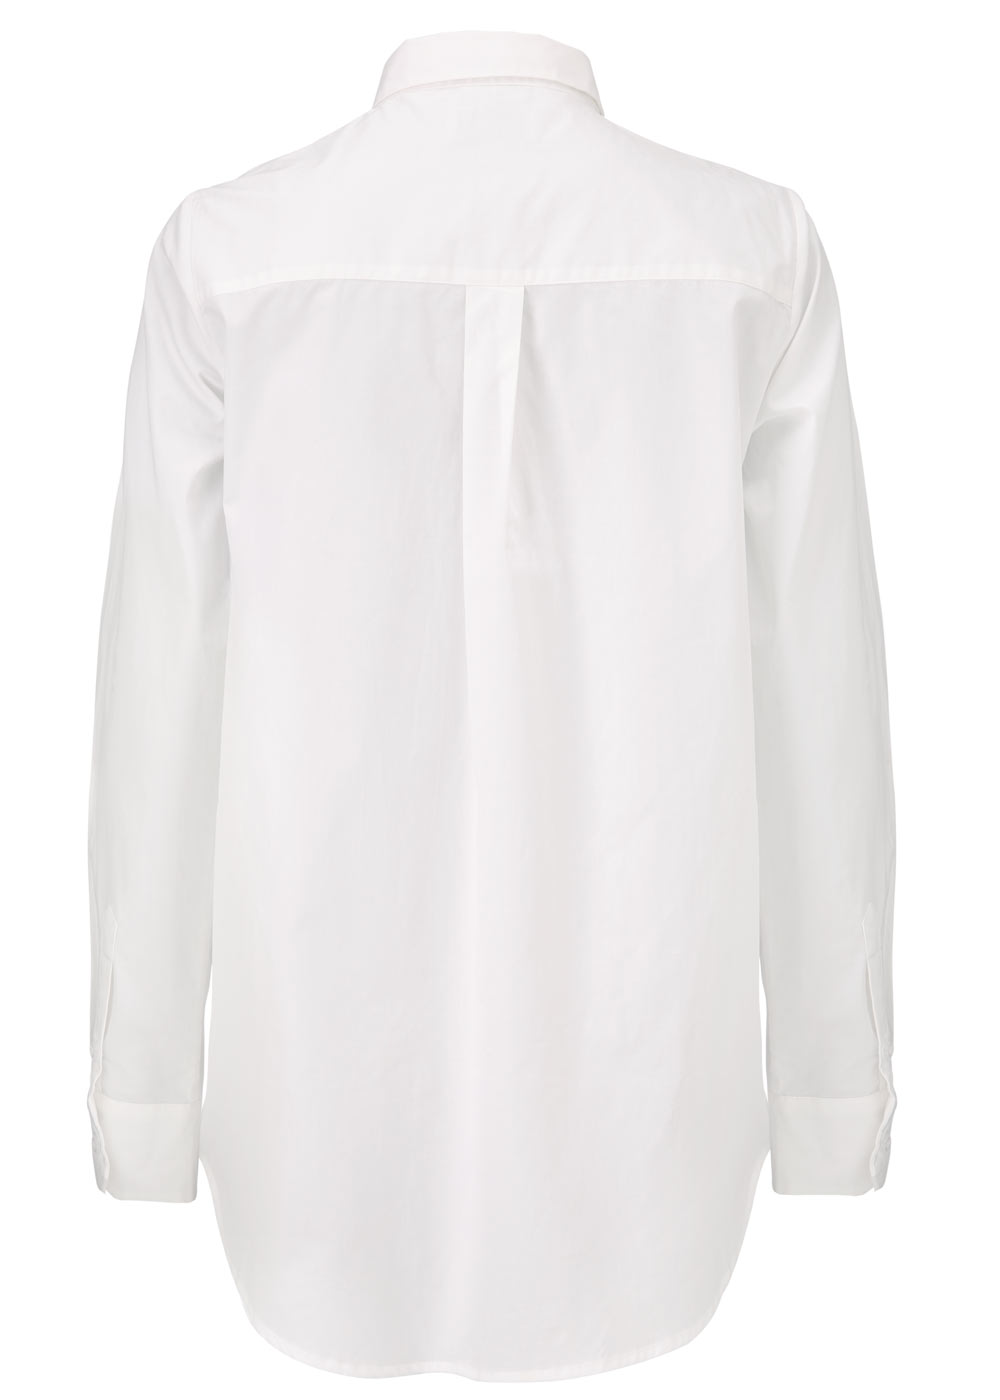 Arthur skjorte, off white, x-small